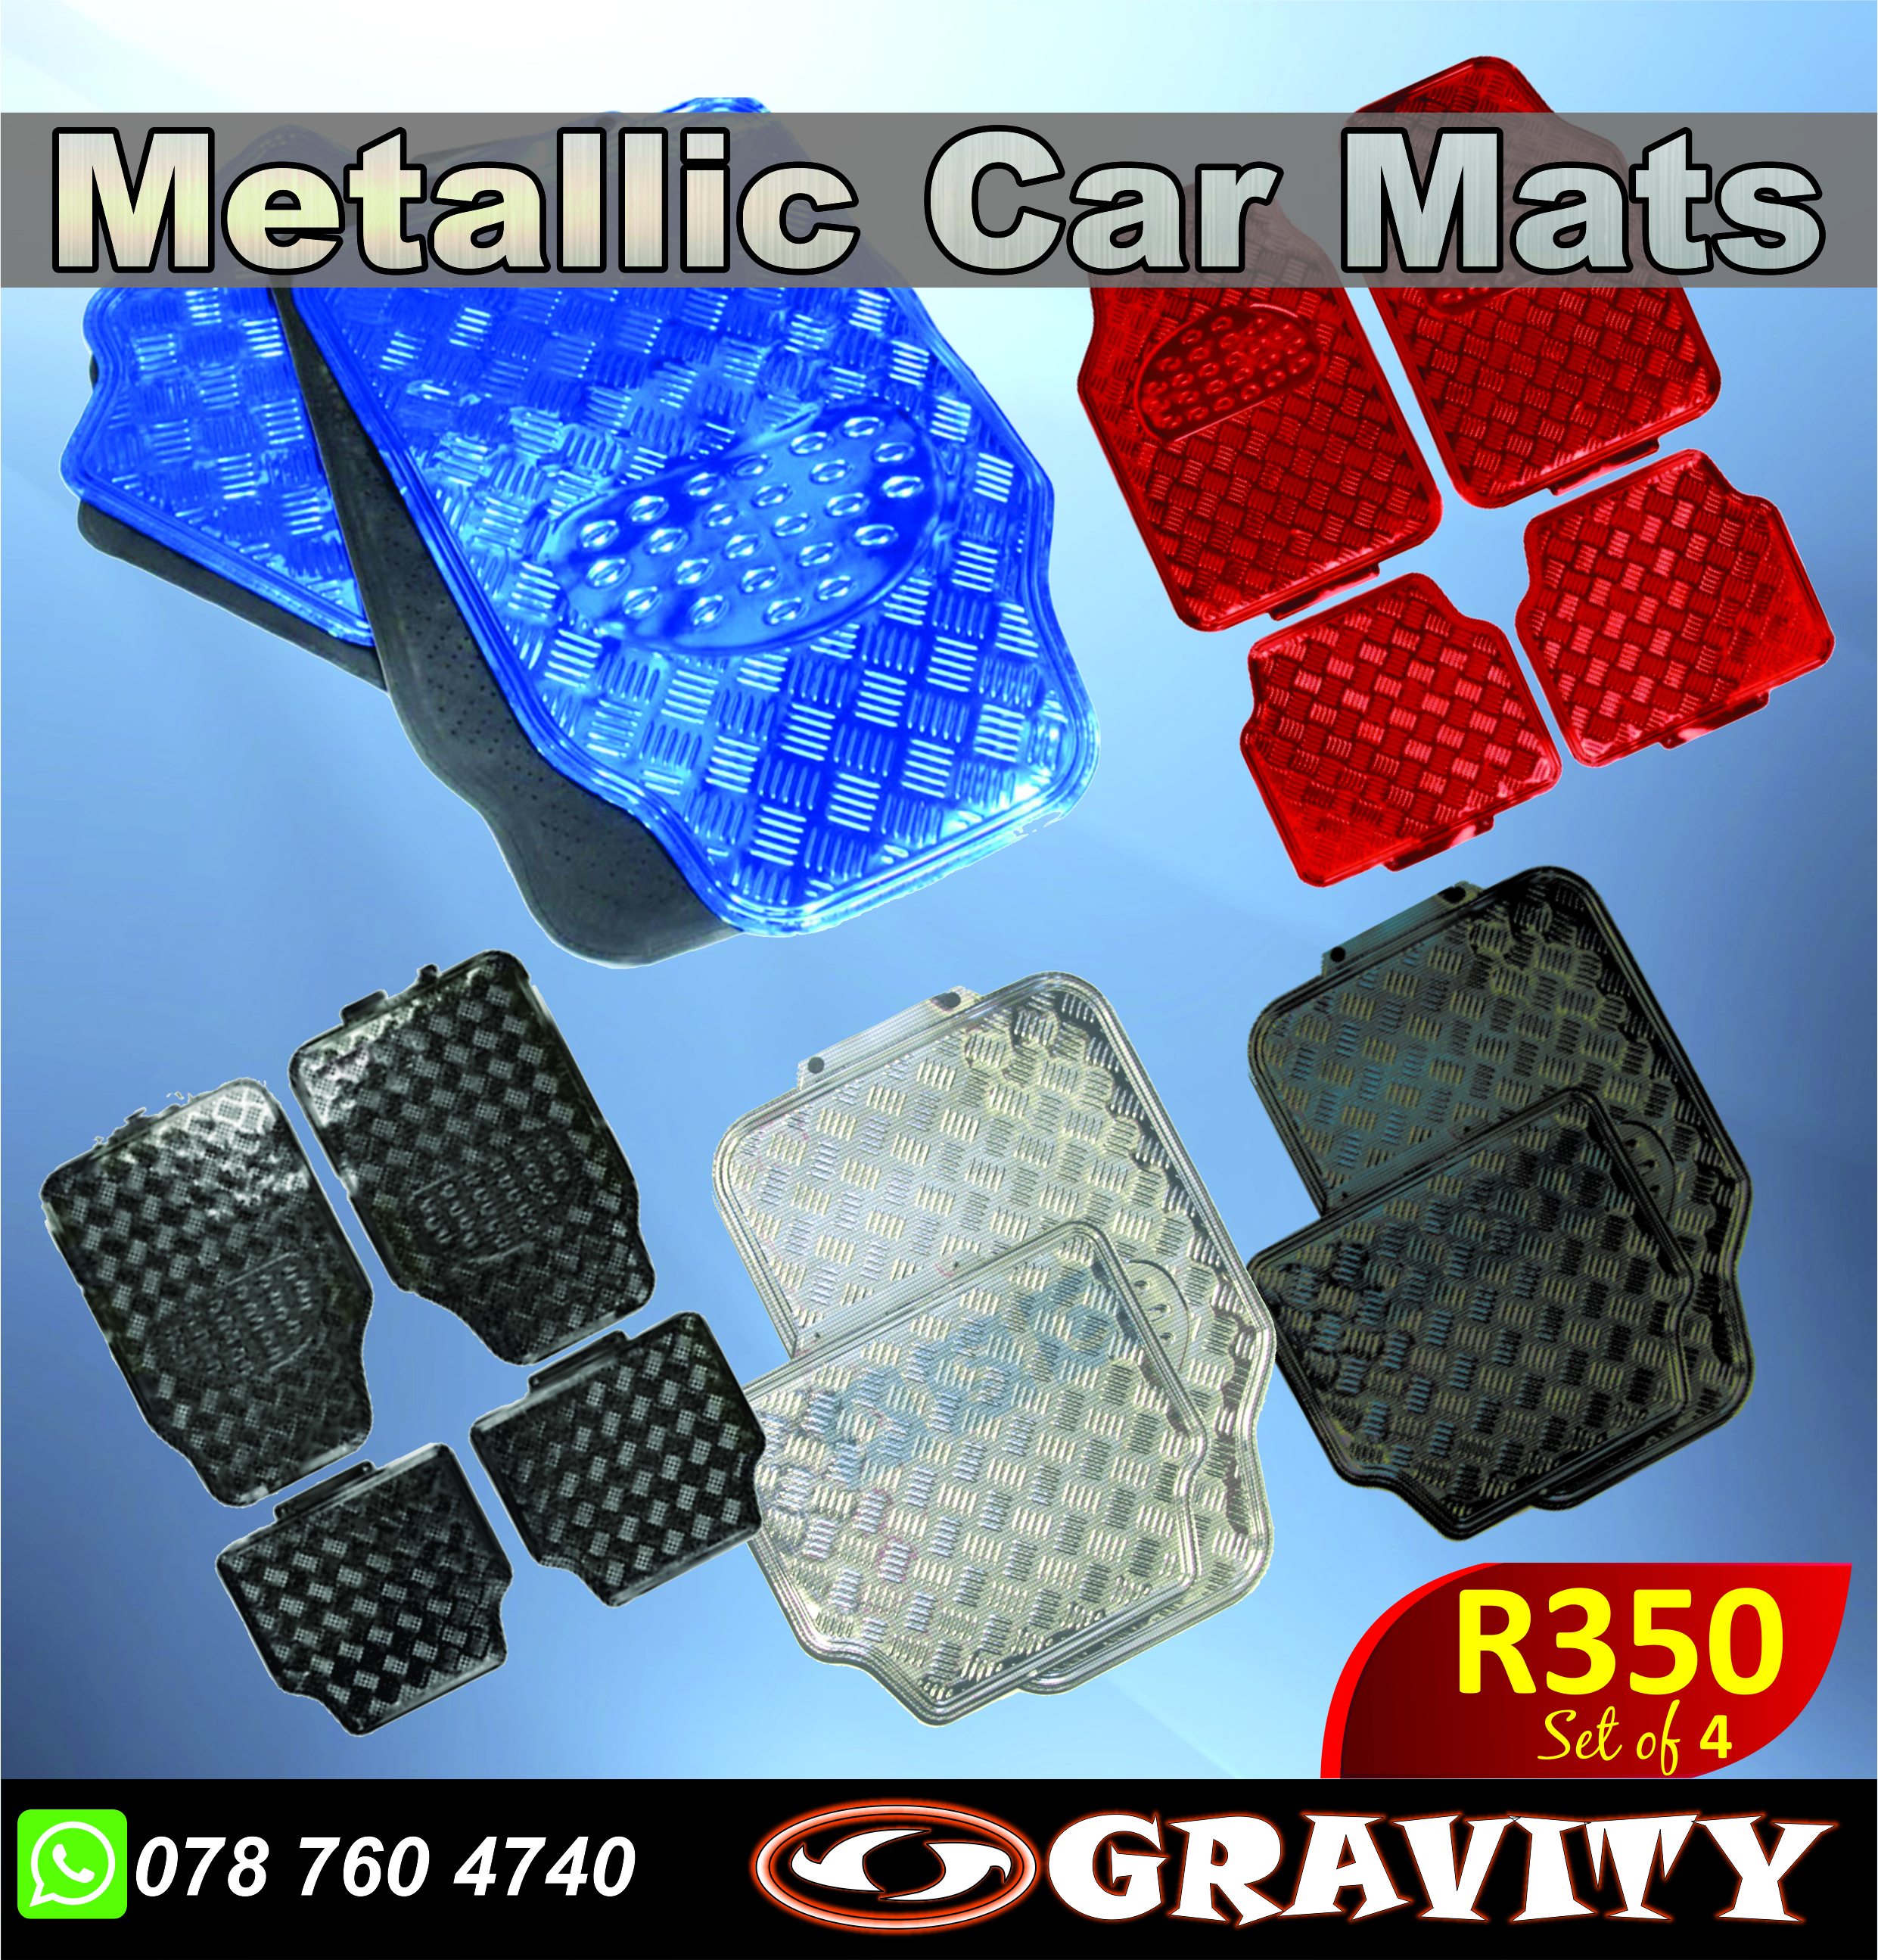 car mats gravity durban chrome mats metallic car mats gravity durban